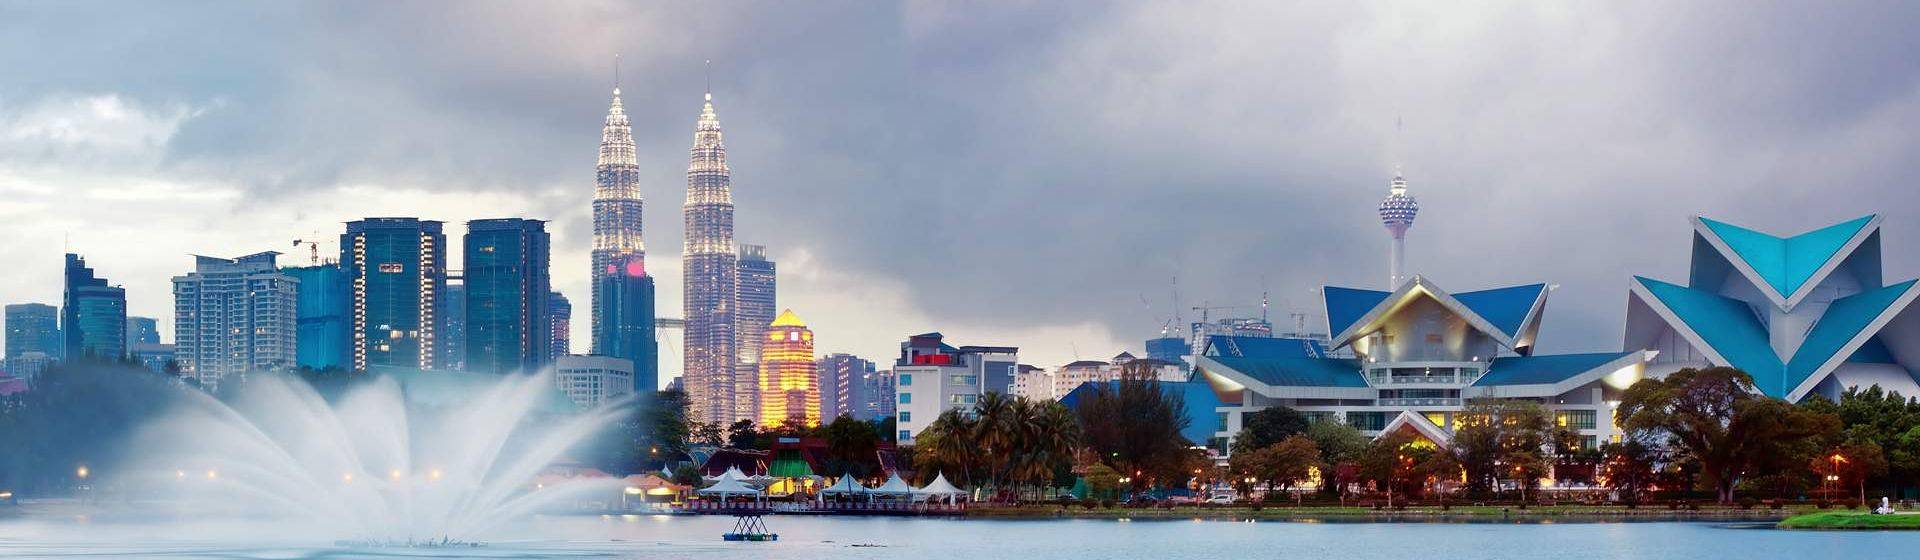 Holidays to Kuala Lumpur Image